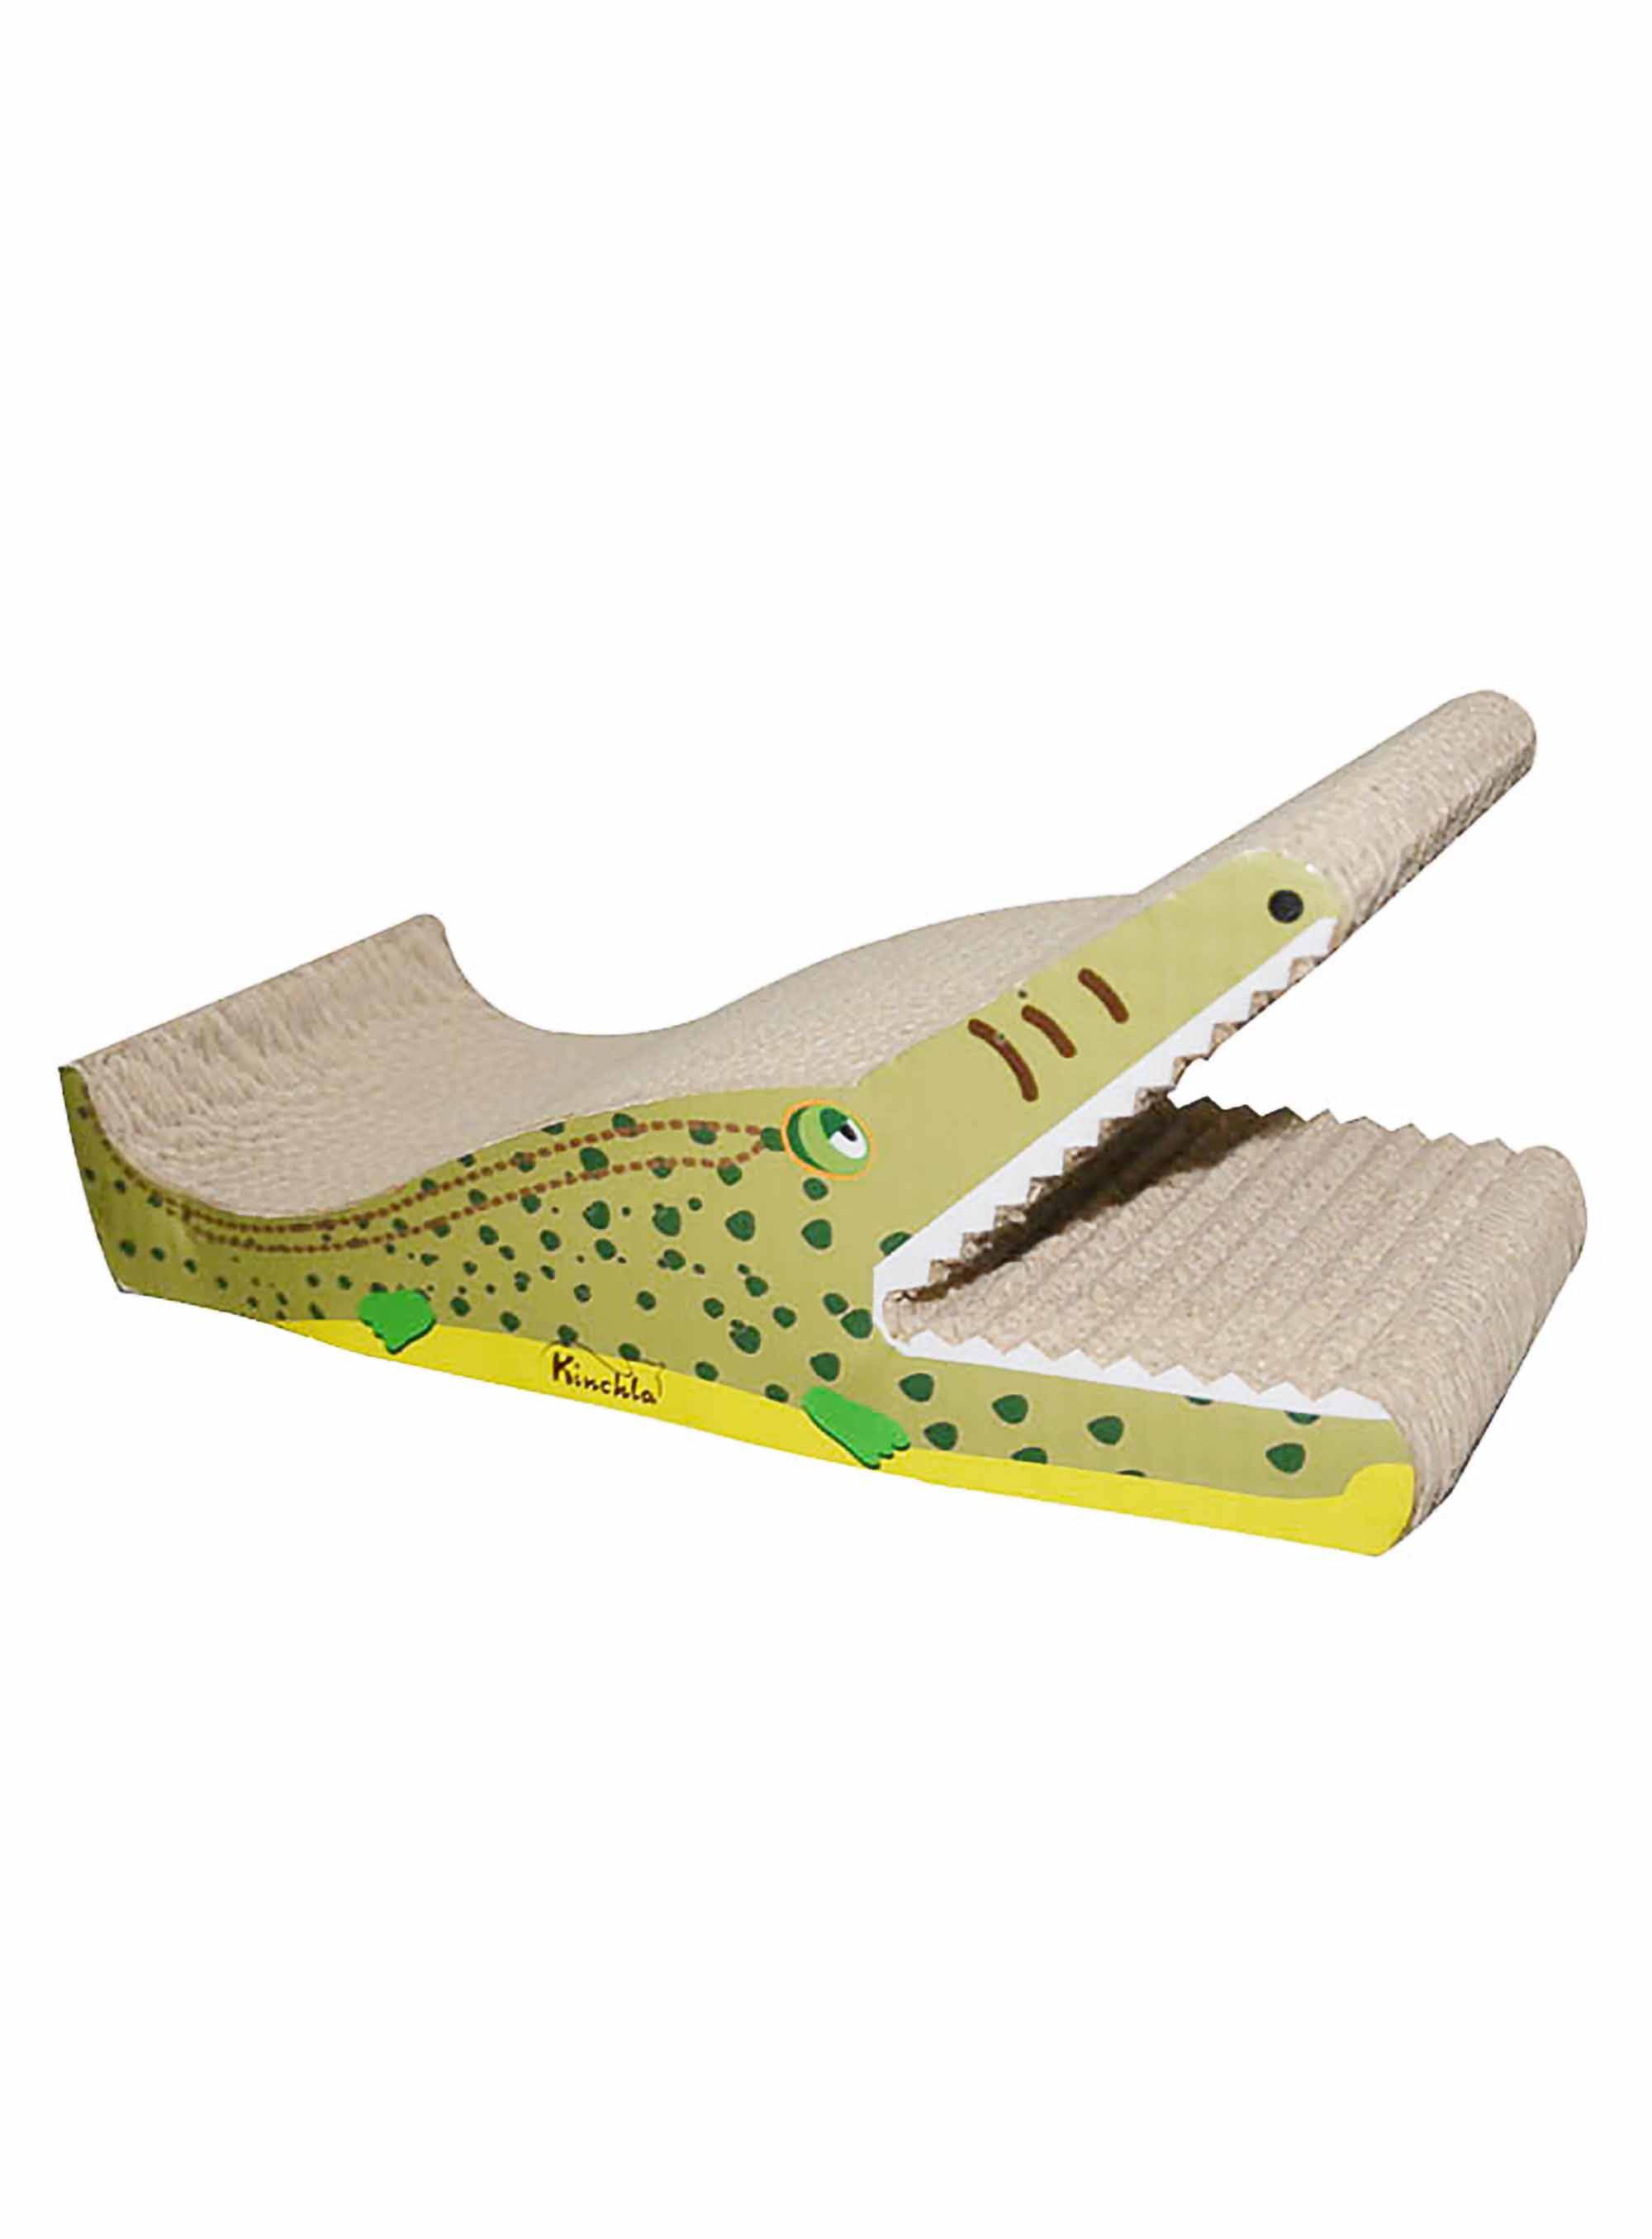 OEM/ODM Supplier Cardboard Cat Scratcher House -
 Crocodile Shape Cat Scratcher – YJ Display